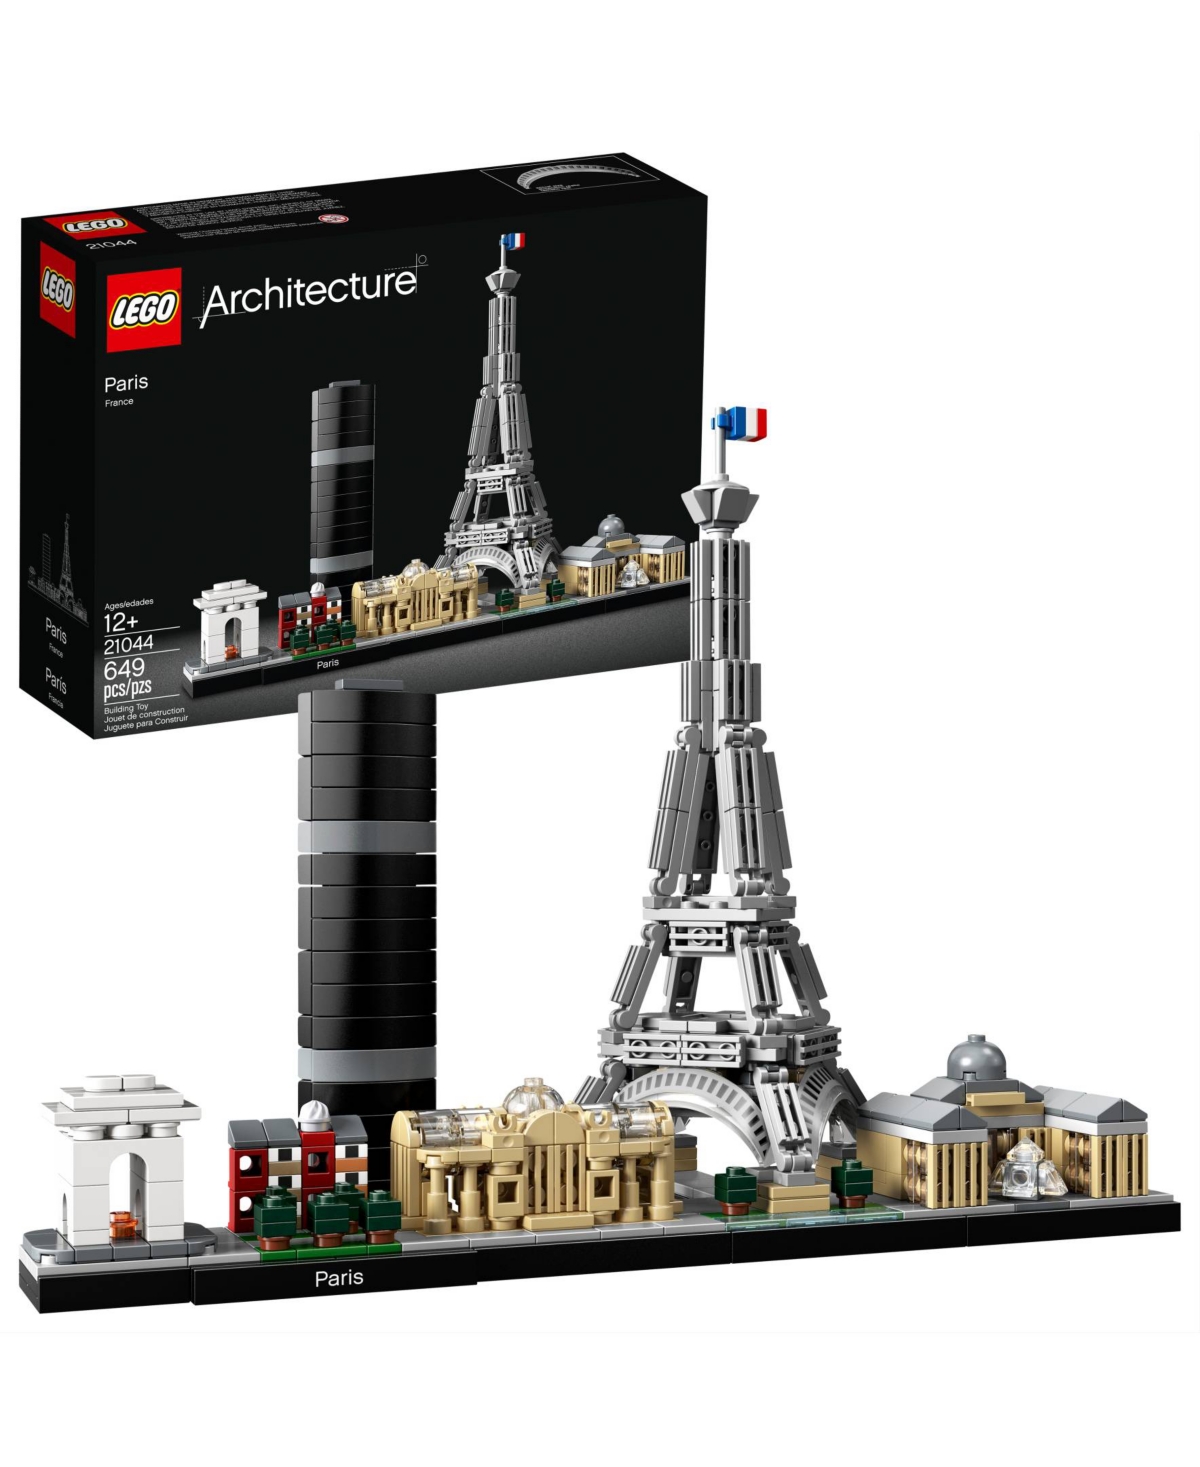 Lego Kids' Paris 649 Pieces Toy Set In No Color